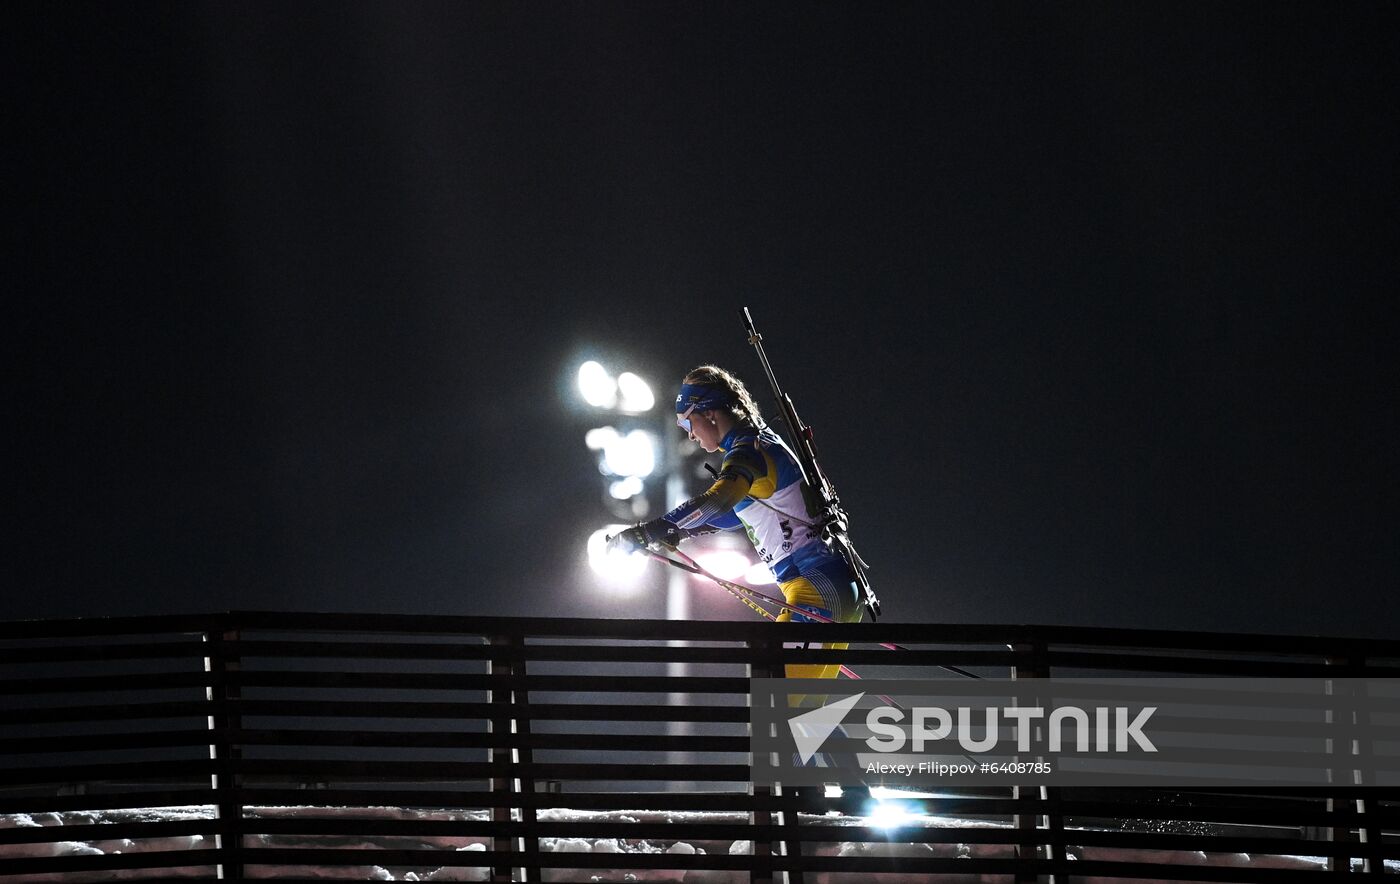 Finland Biathlon World Cup Women Relay